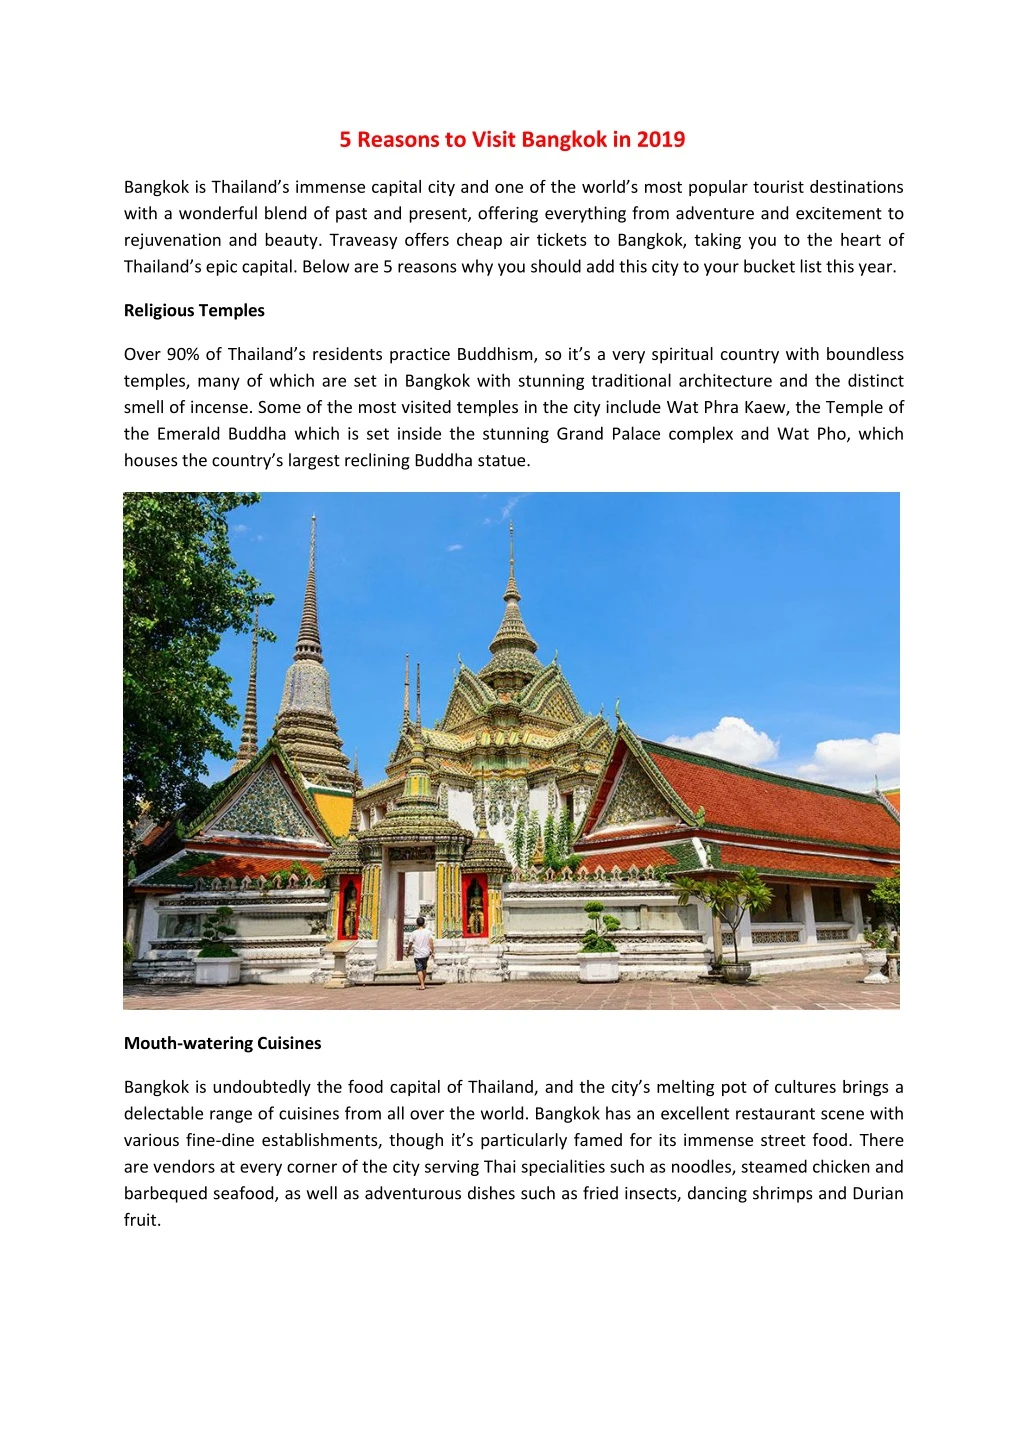 5 reasons to visit bangkok in 2019